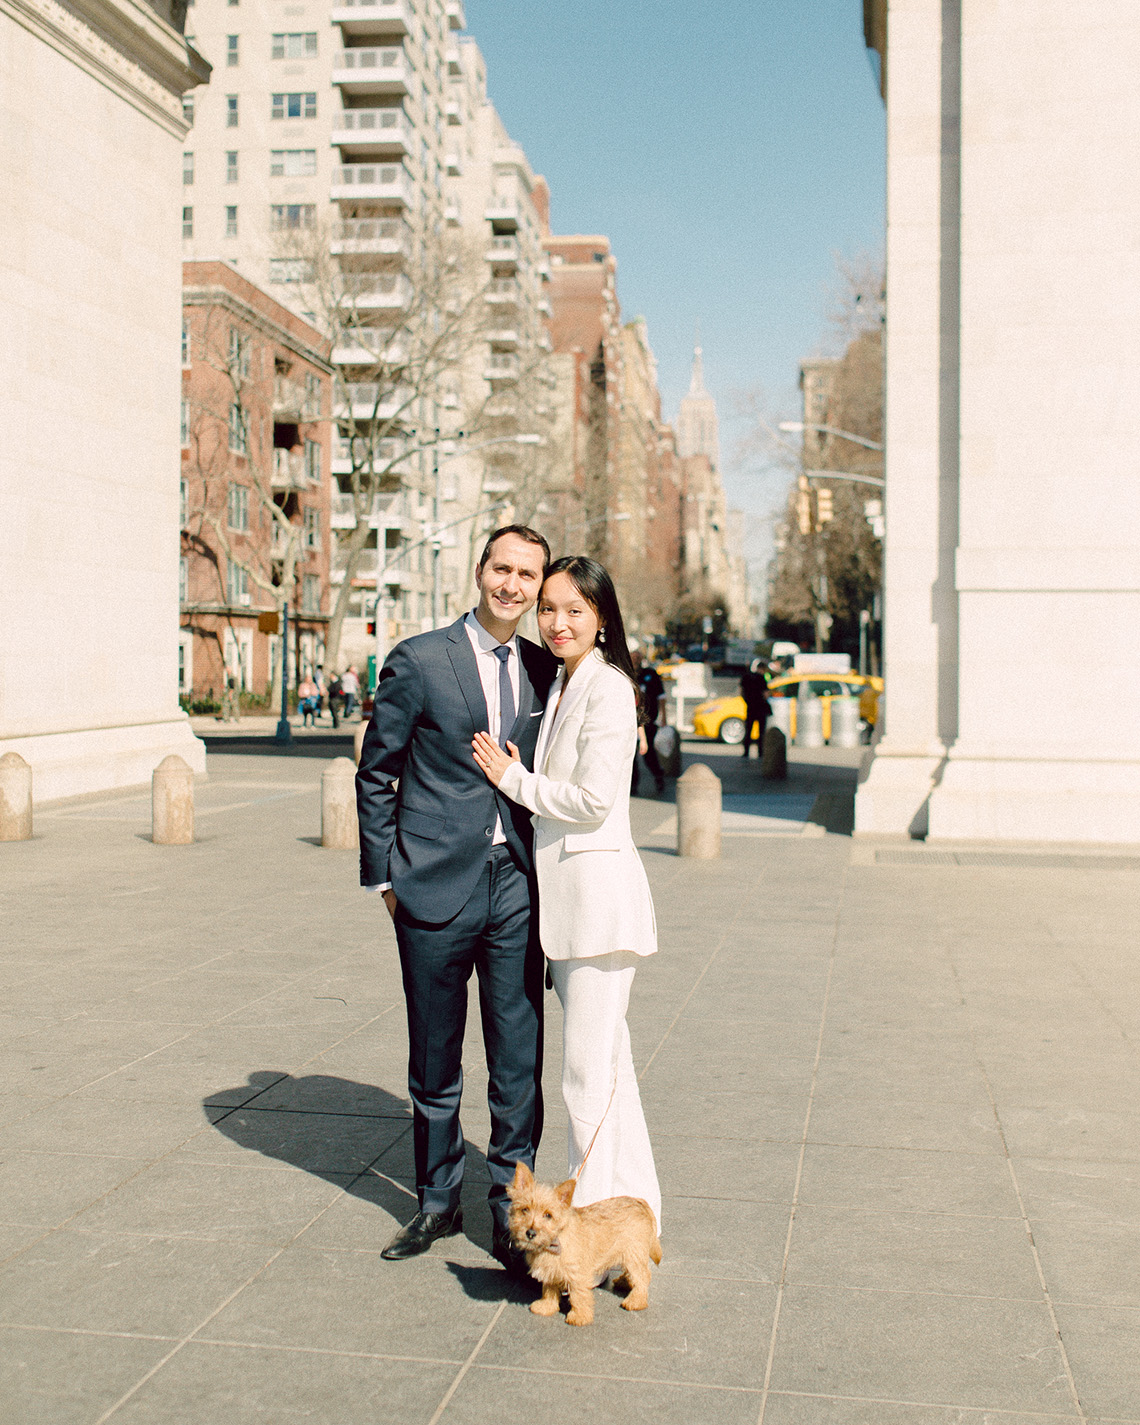 NYC marriage bureau wedding